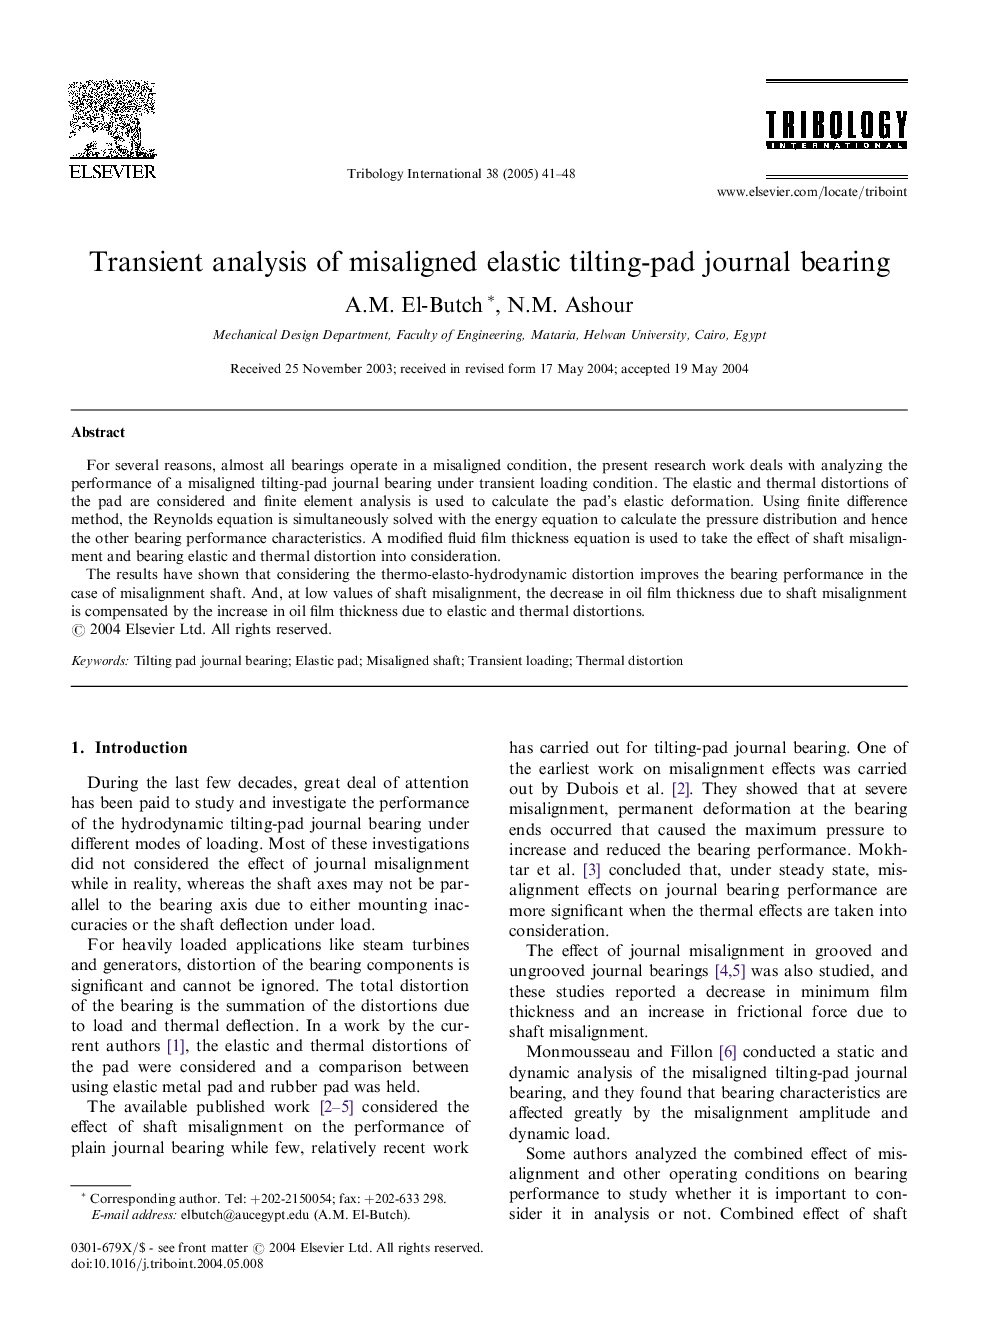 Transient analysis of misaligned elastic tilting-pad journal bearing